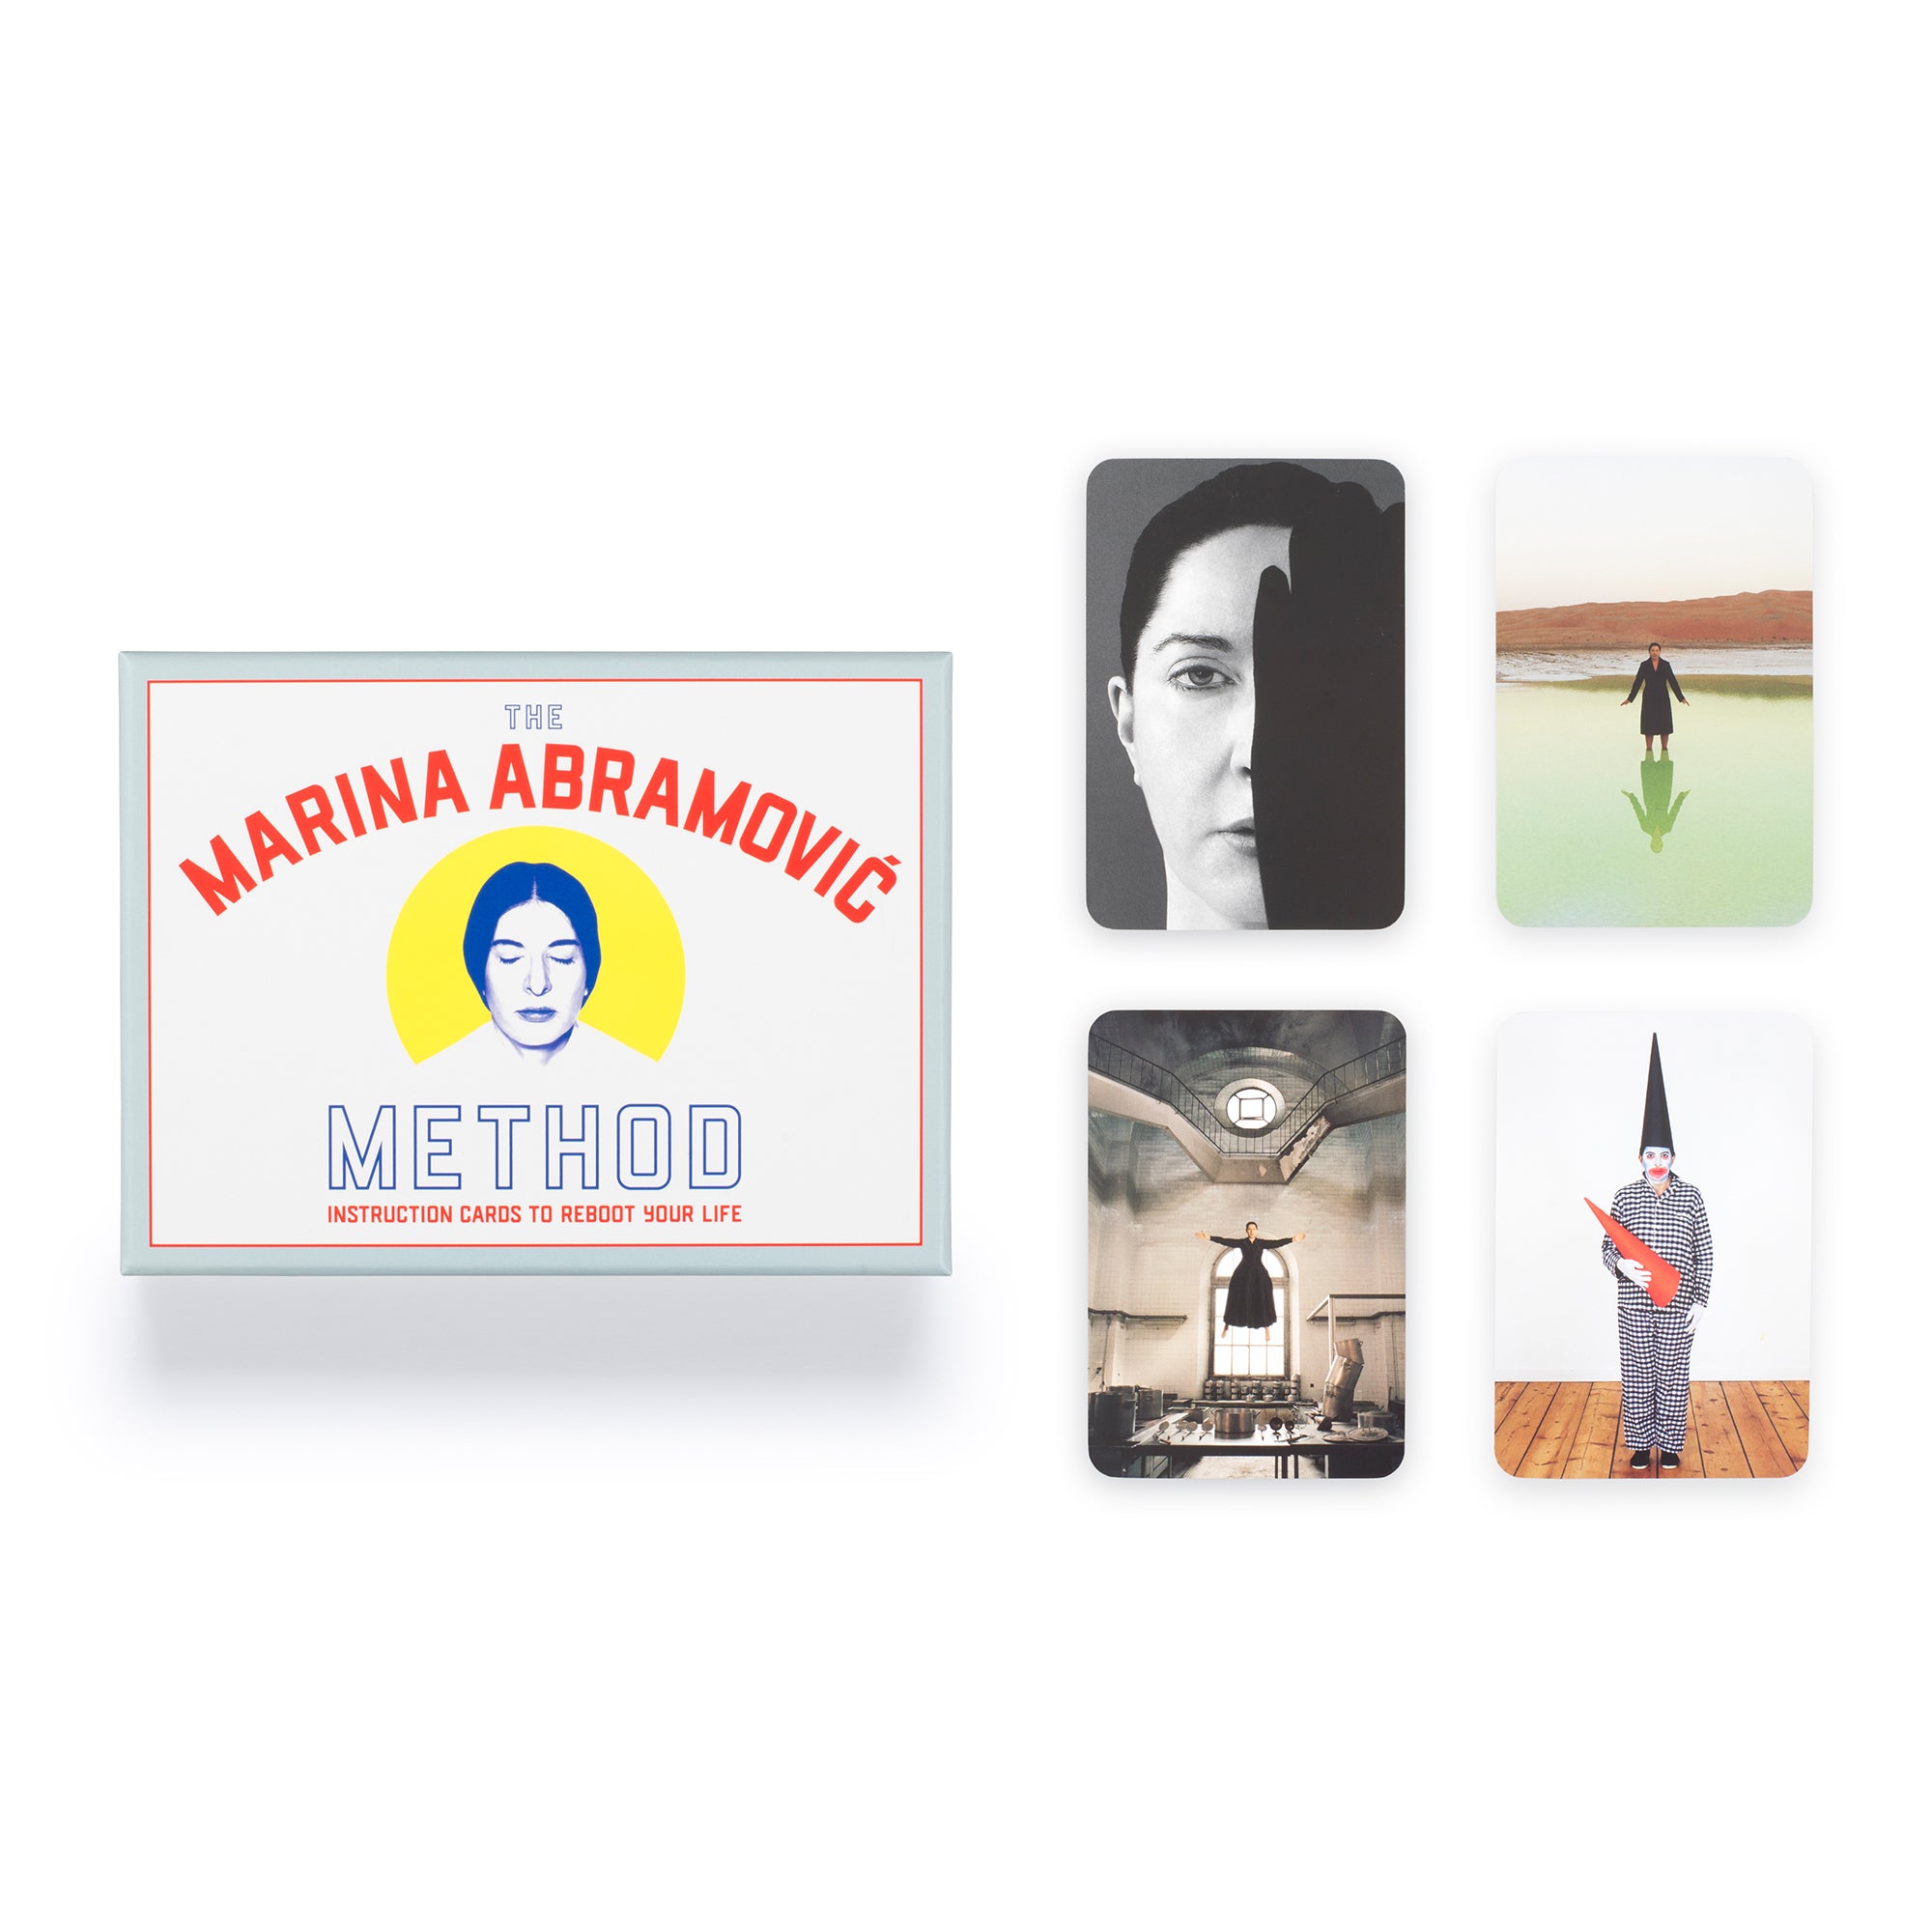 The Marina Abramovic Method Box and Images